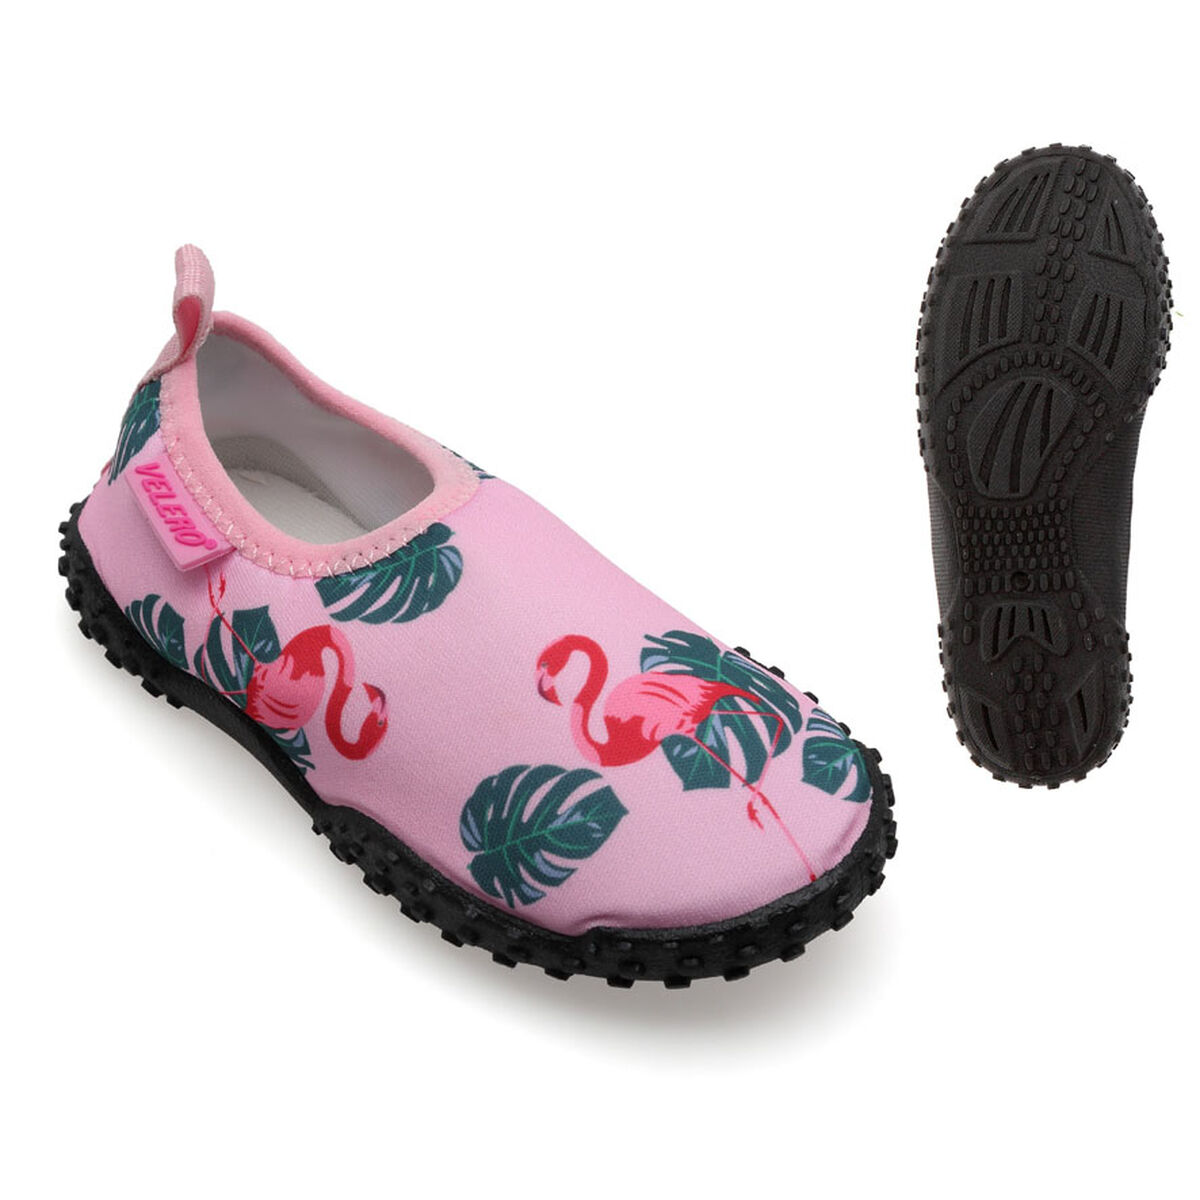 Botoși pentru Copii Flamingo Roz - Mărime la picior 23